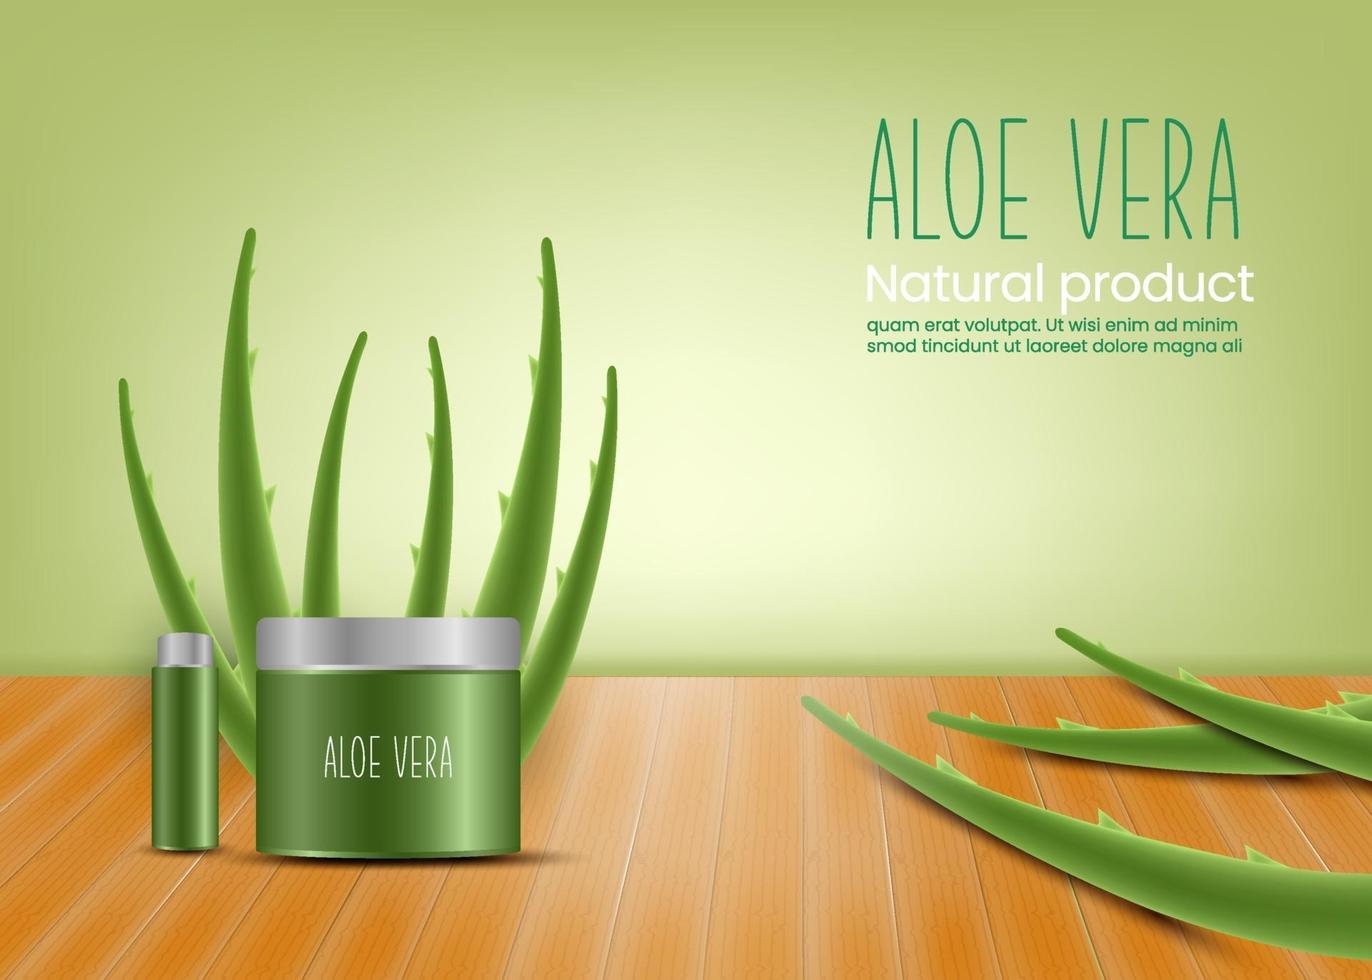 realistic illustration of aloe vera vector concept background